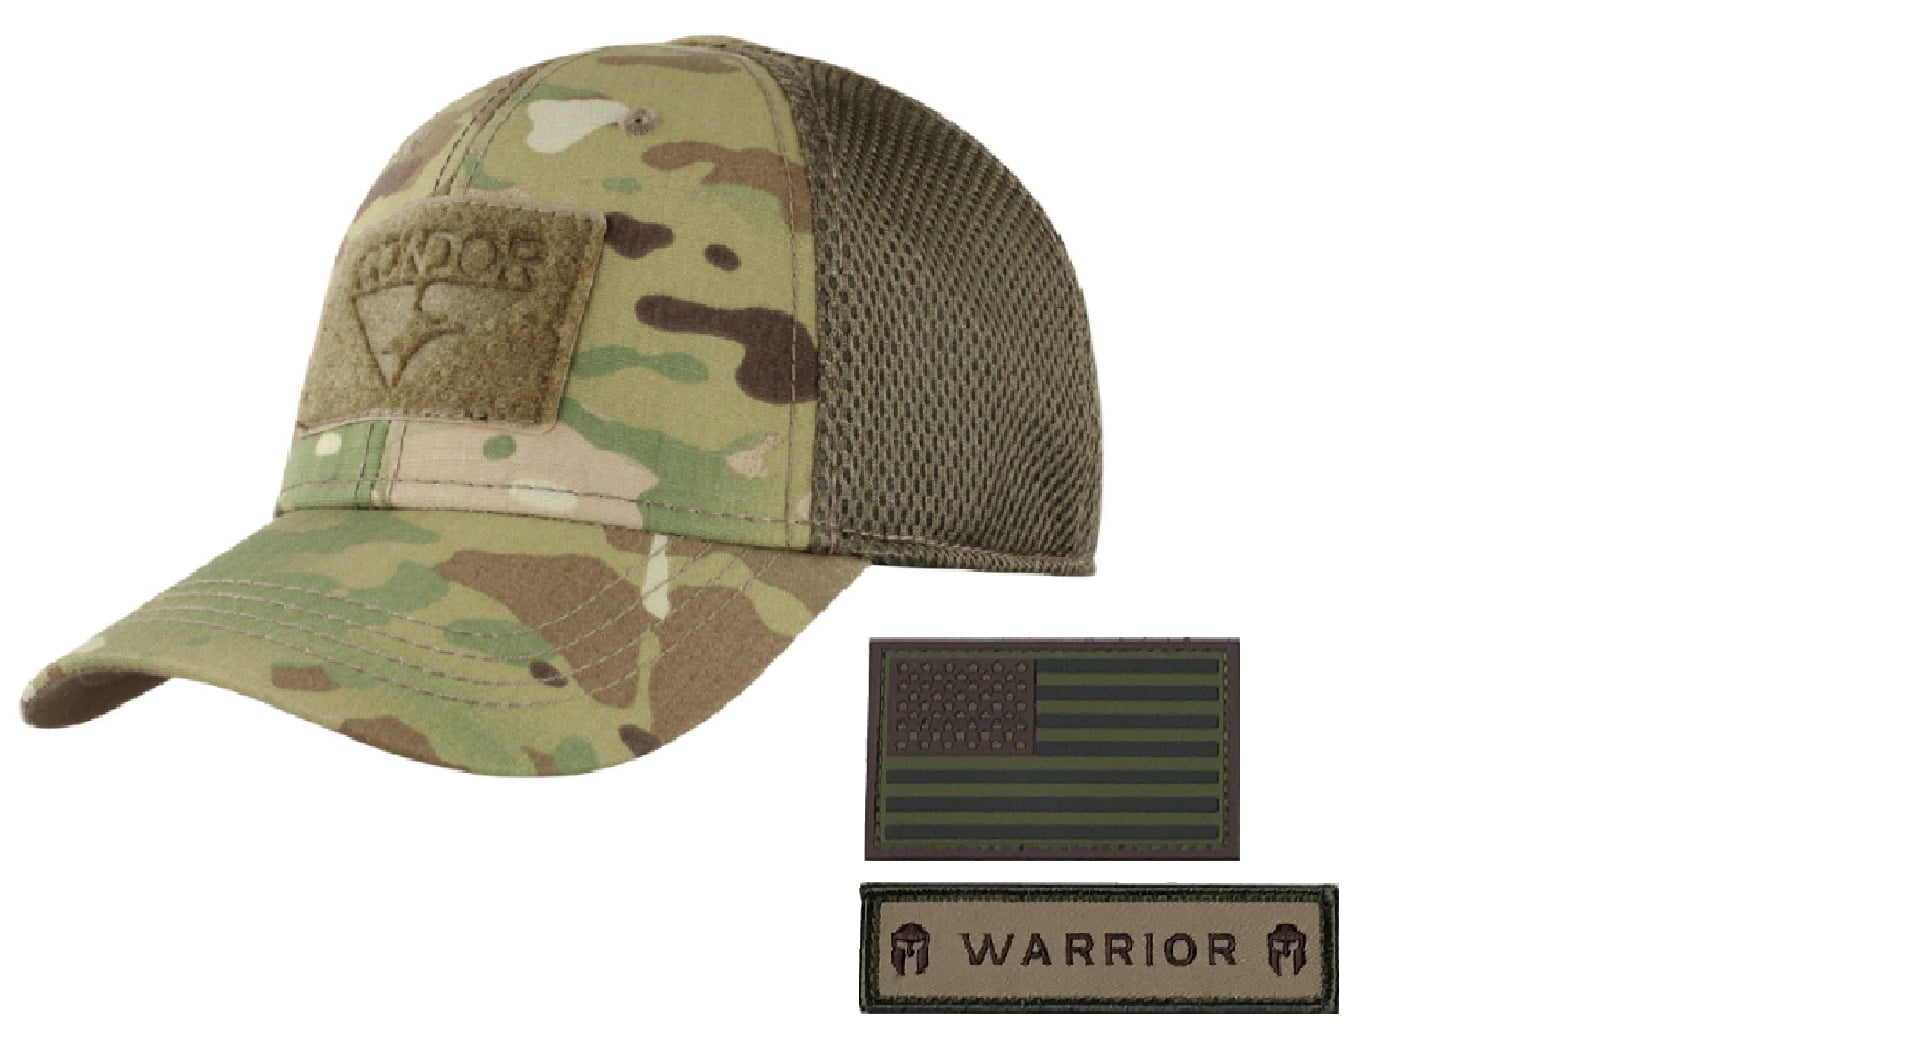 Condor Outdoor Tactical Military Headgear Hunting Baseball Cap Arid Multicam for sale online 